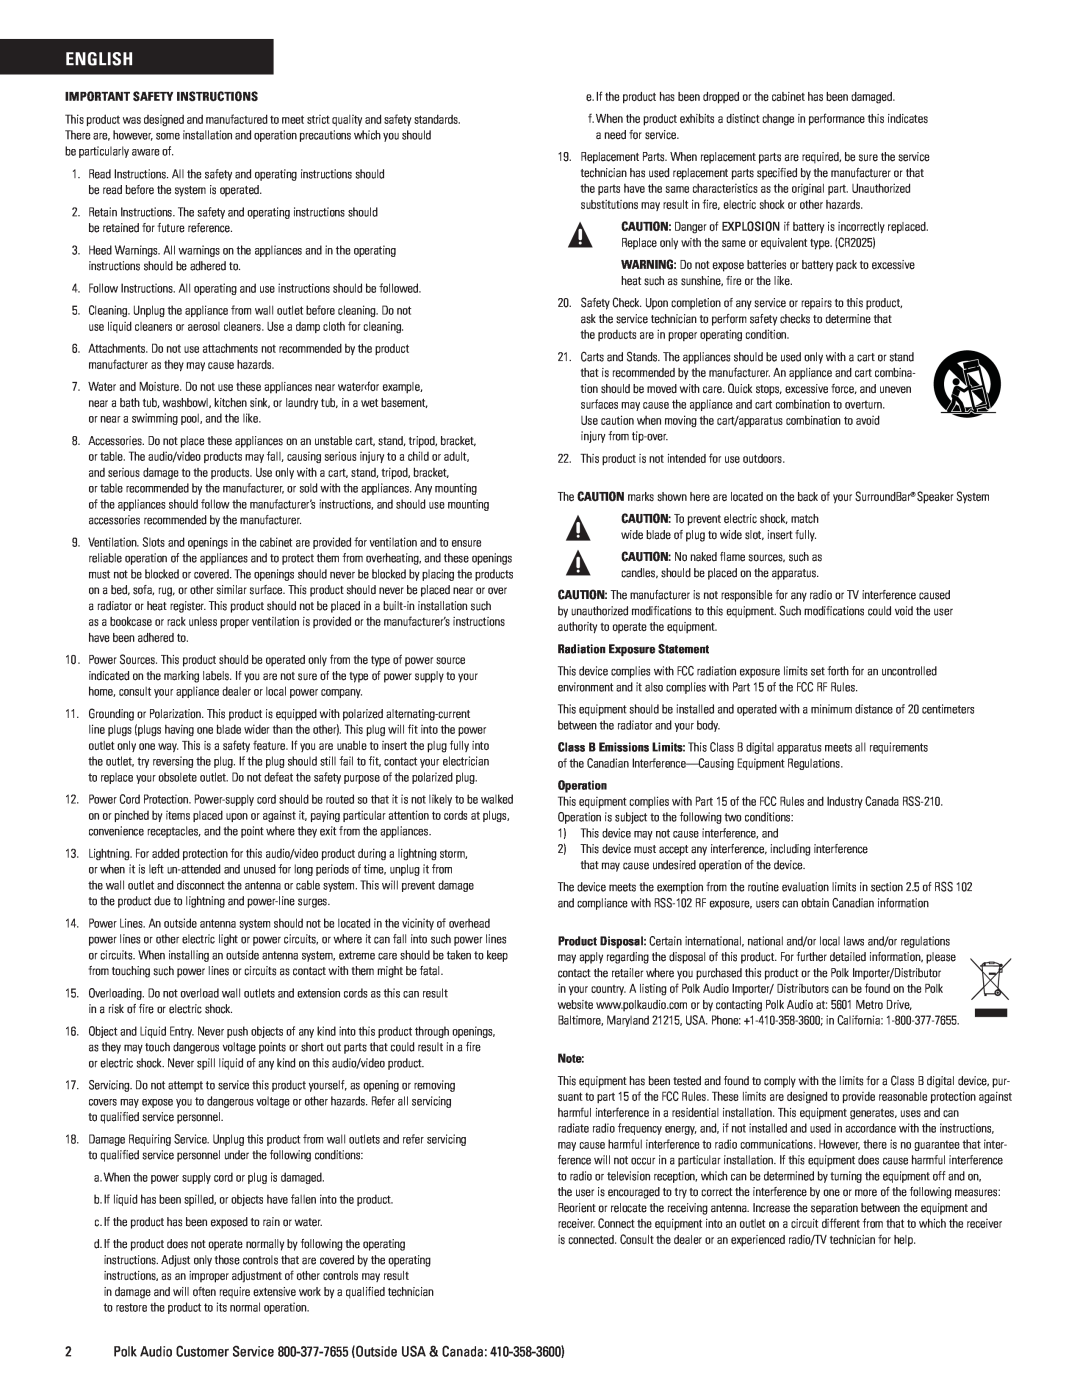 Polk Audio 9000 manual English, Important Safety Instructions, Radiation Exposure Statement, Operation 